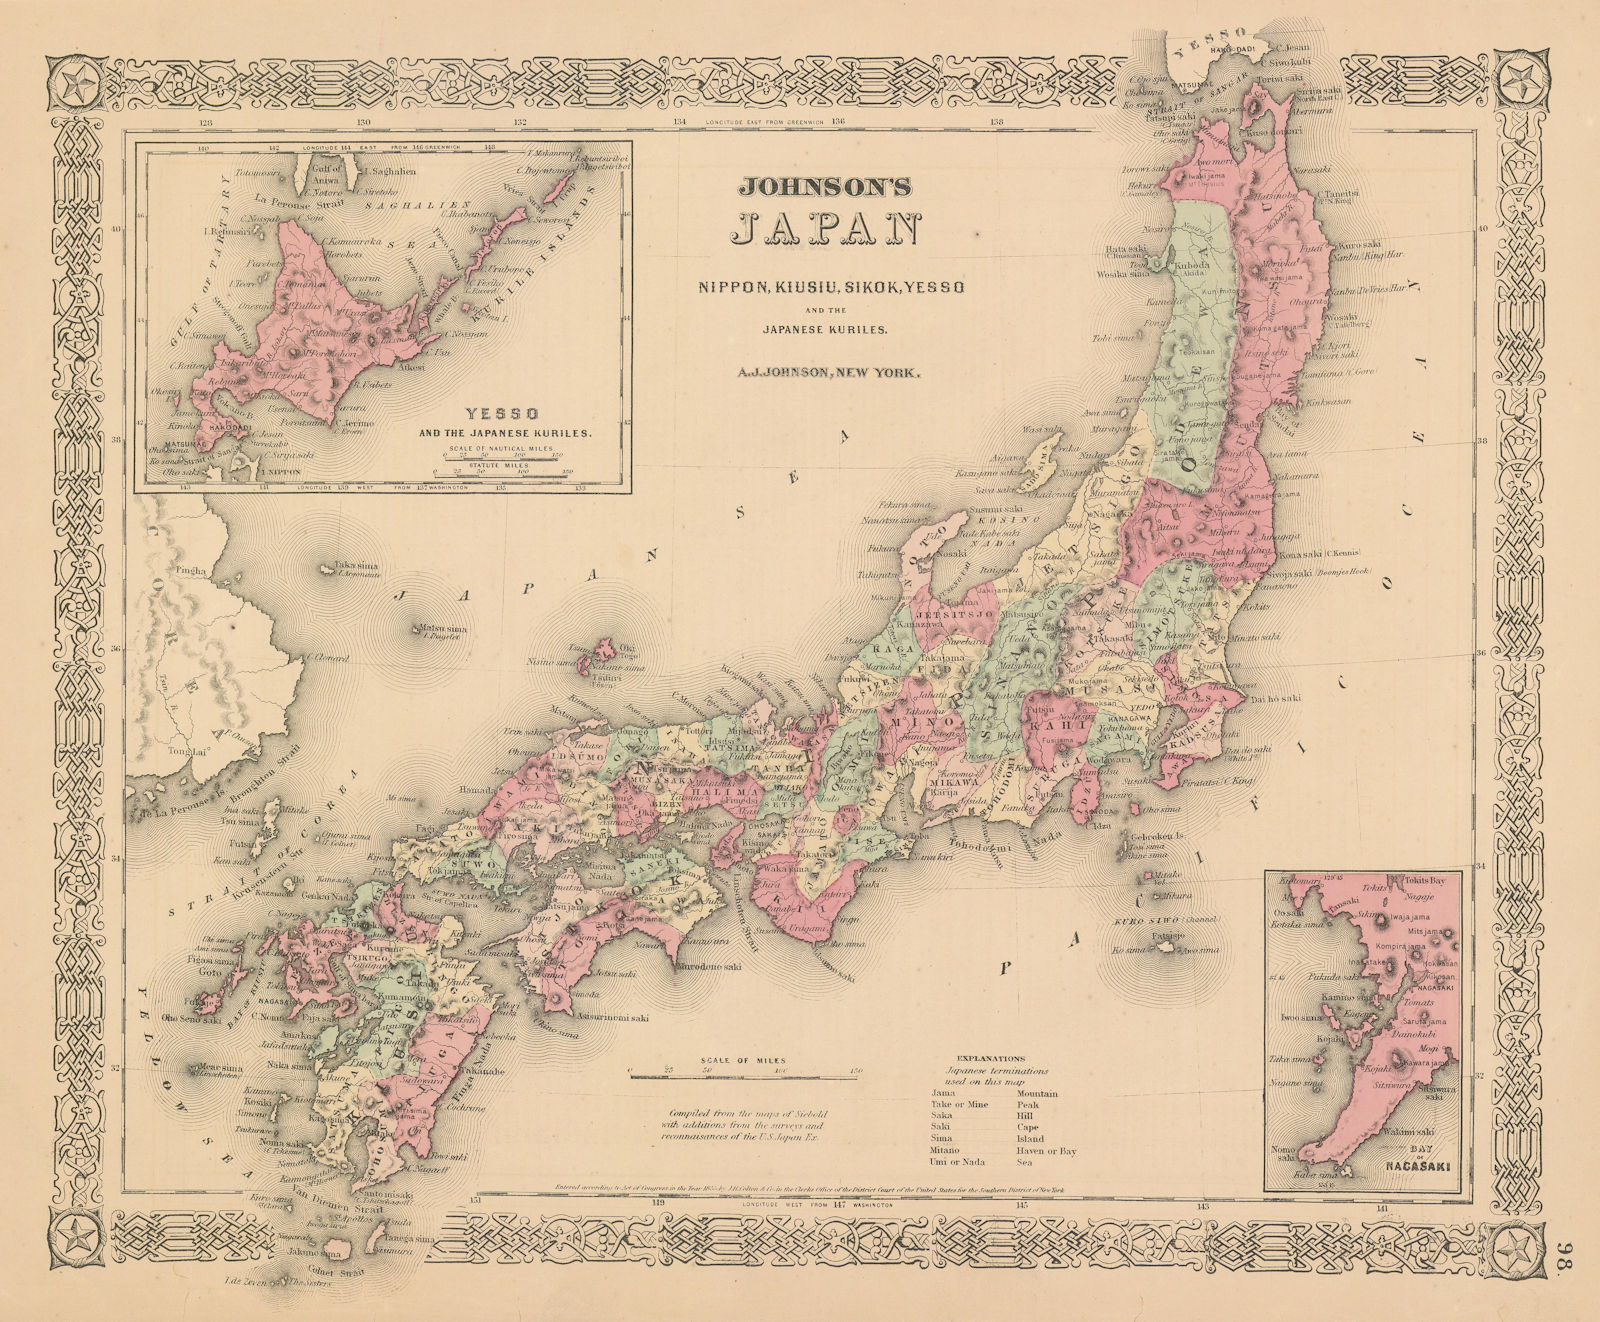 Johnson's Japan, Nippon, Kiusiu, Sikok, Yesso & Kuriles. Nagasaki Bay 1867 map